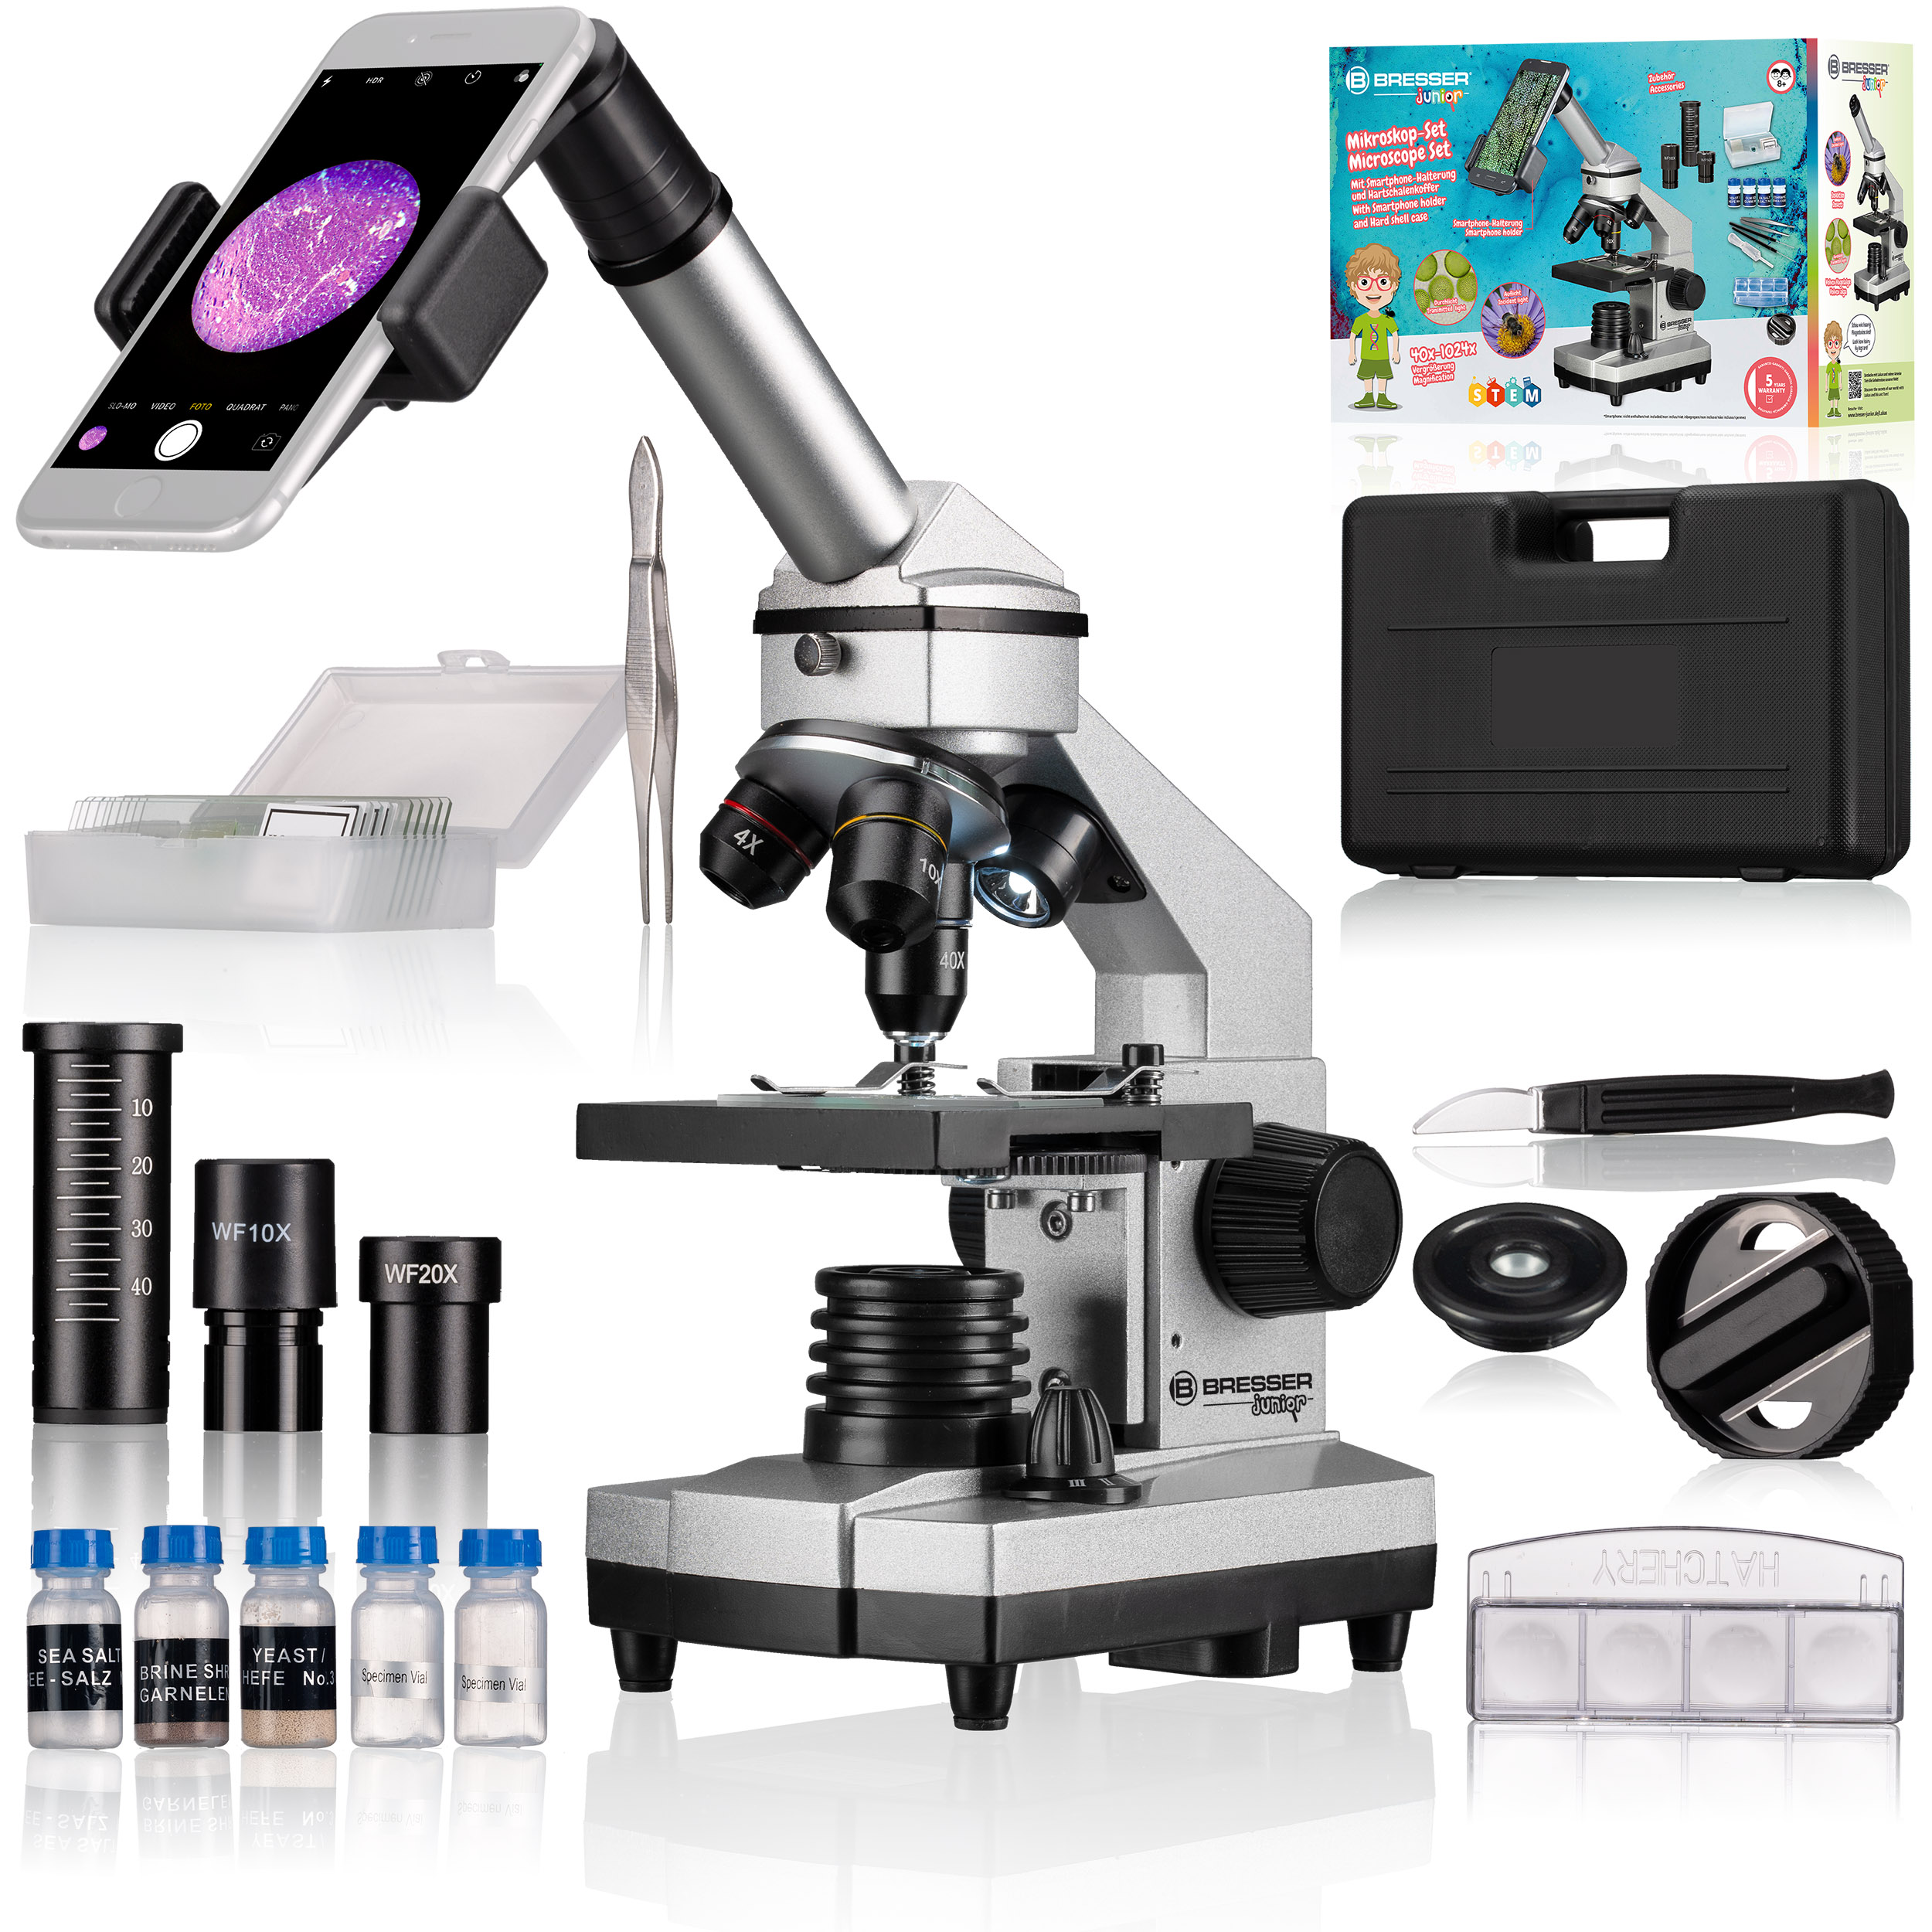 BRESSER JUNIOR Biolux CA 40x-1024x Microscopio